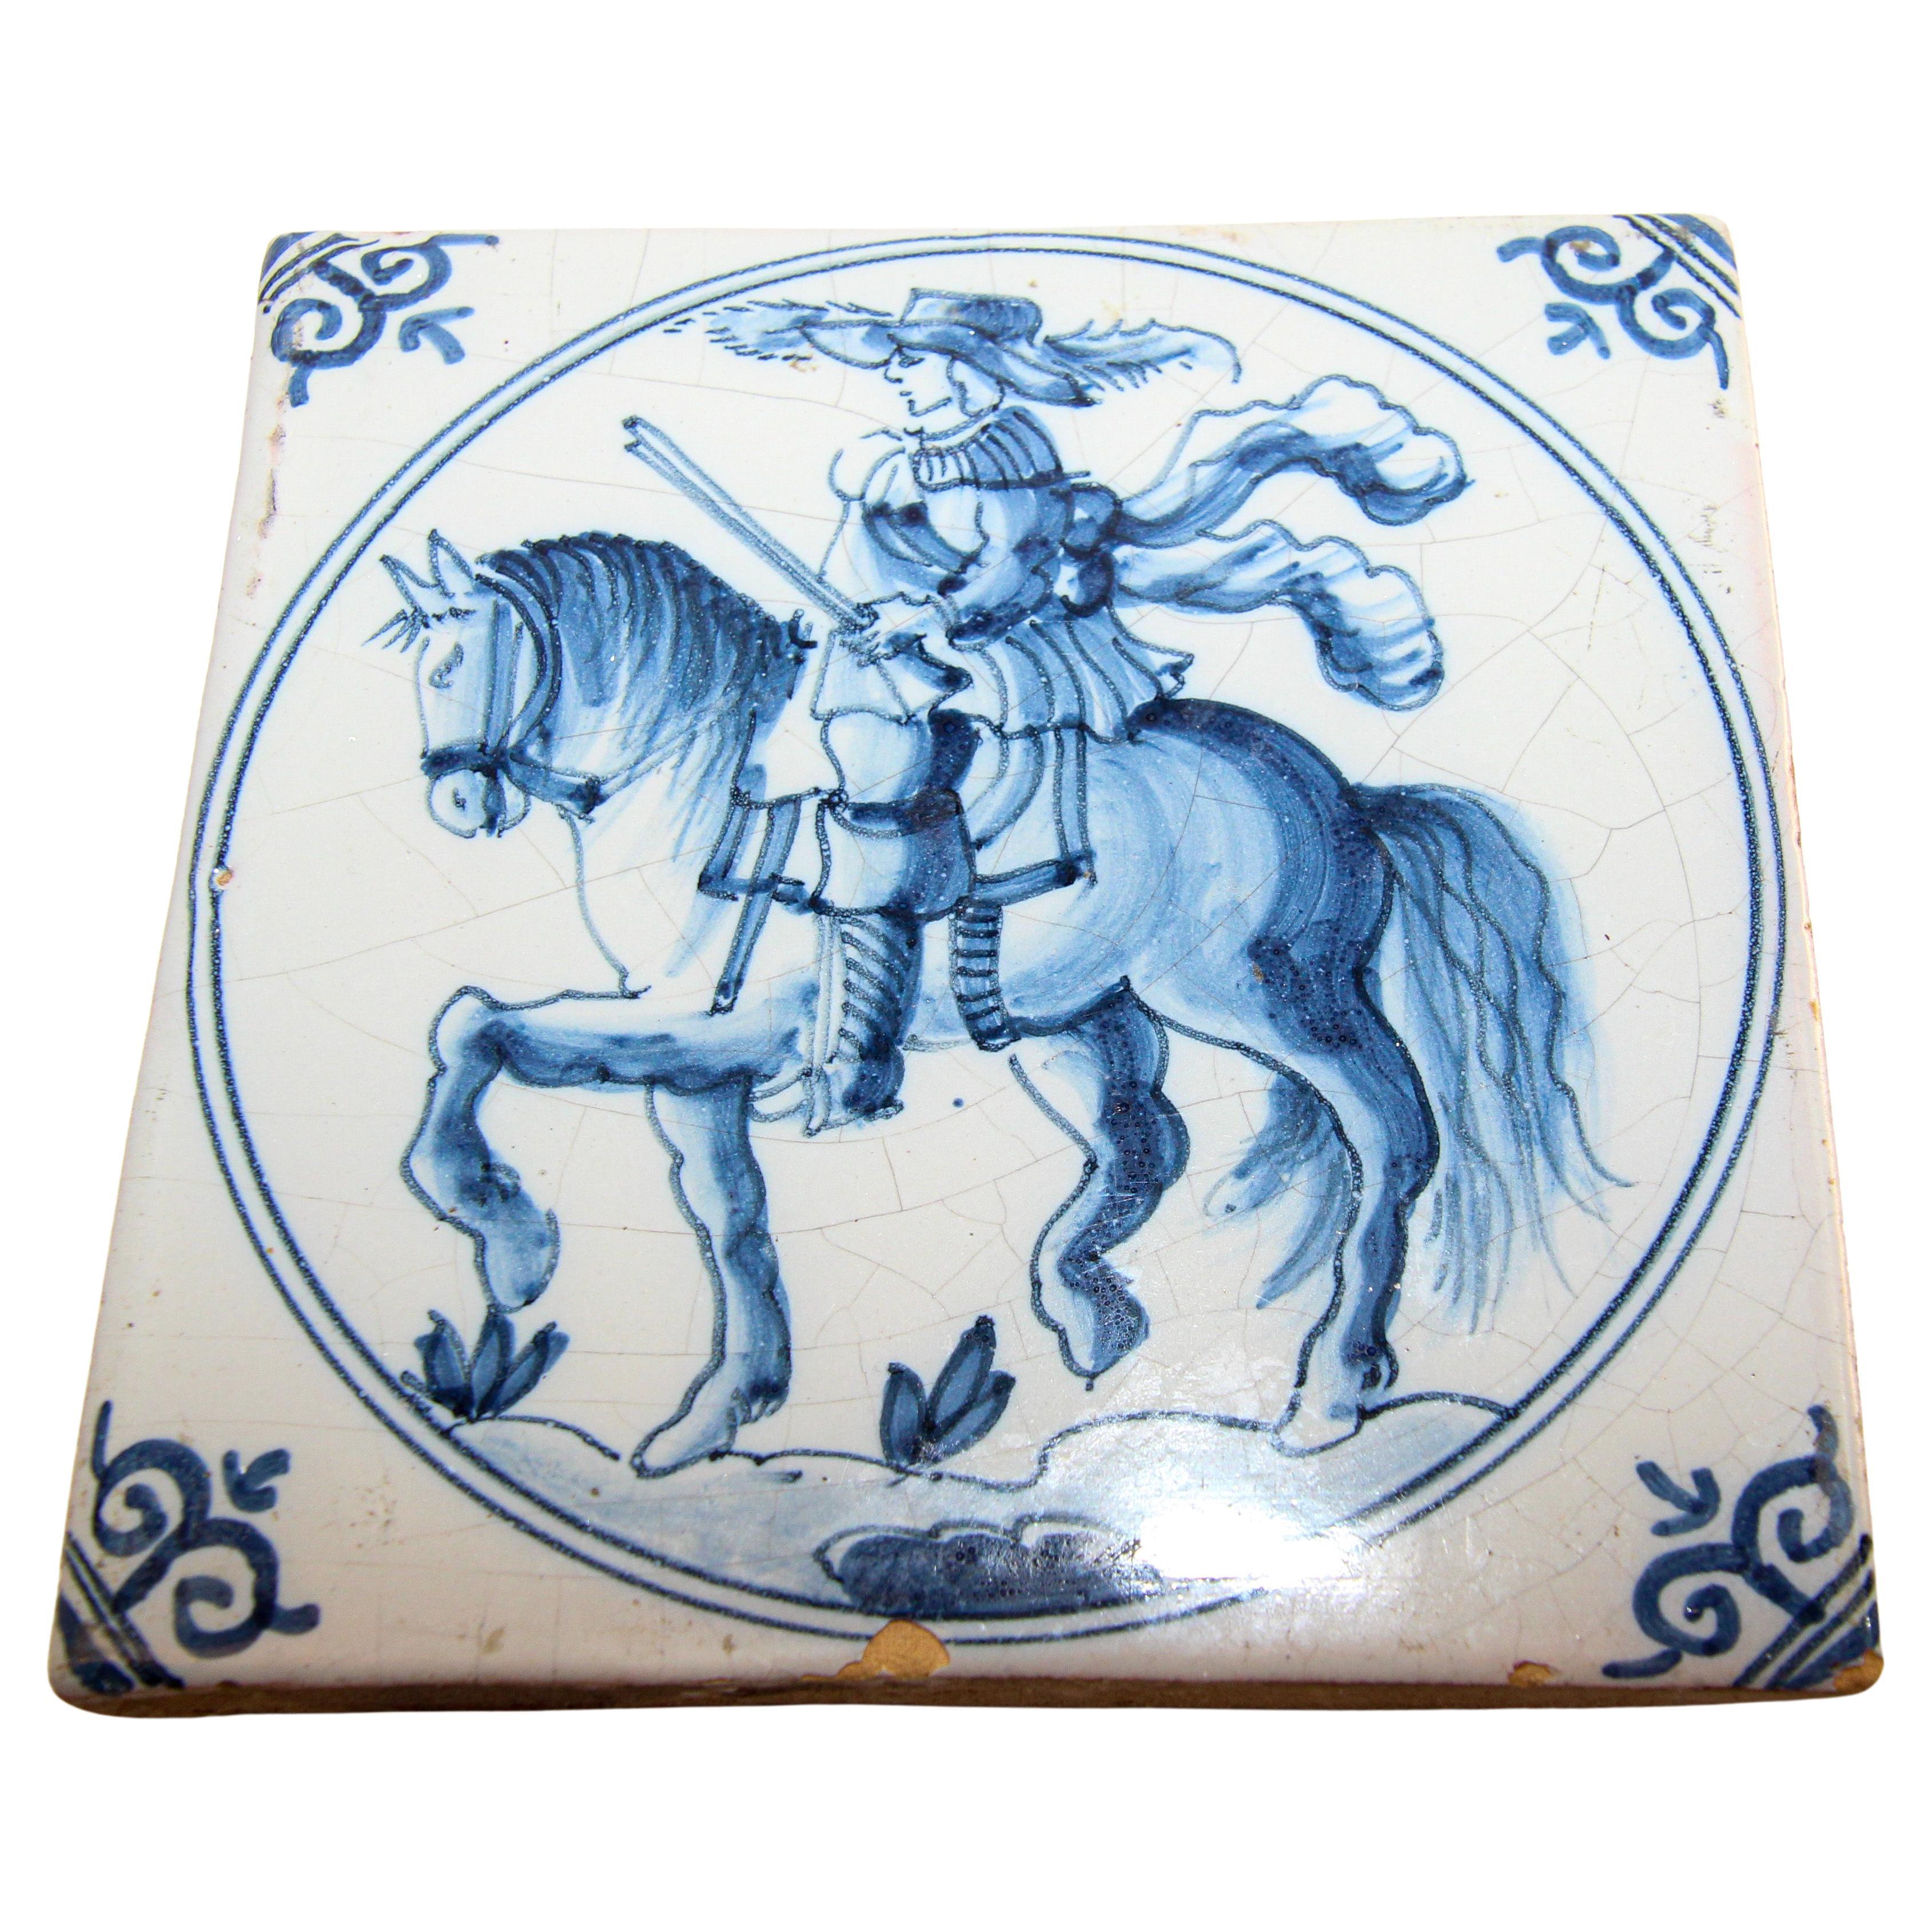 Delft Ceramic Decorative Tile Featuring a Man on Horse